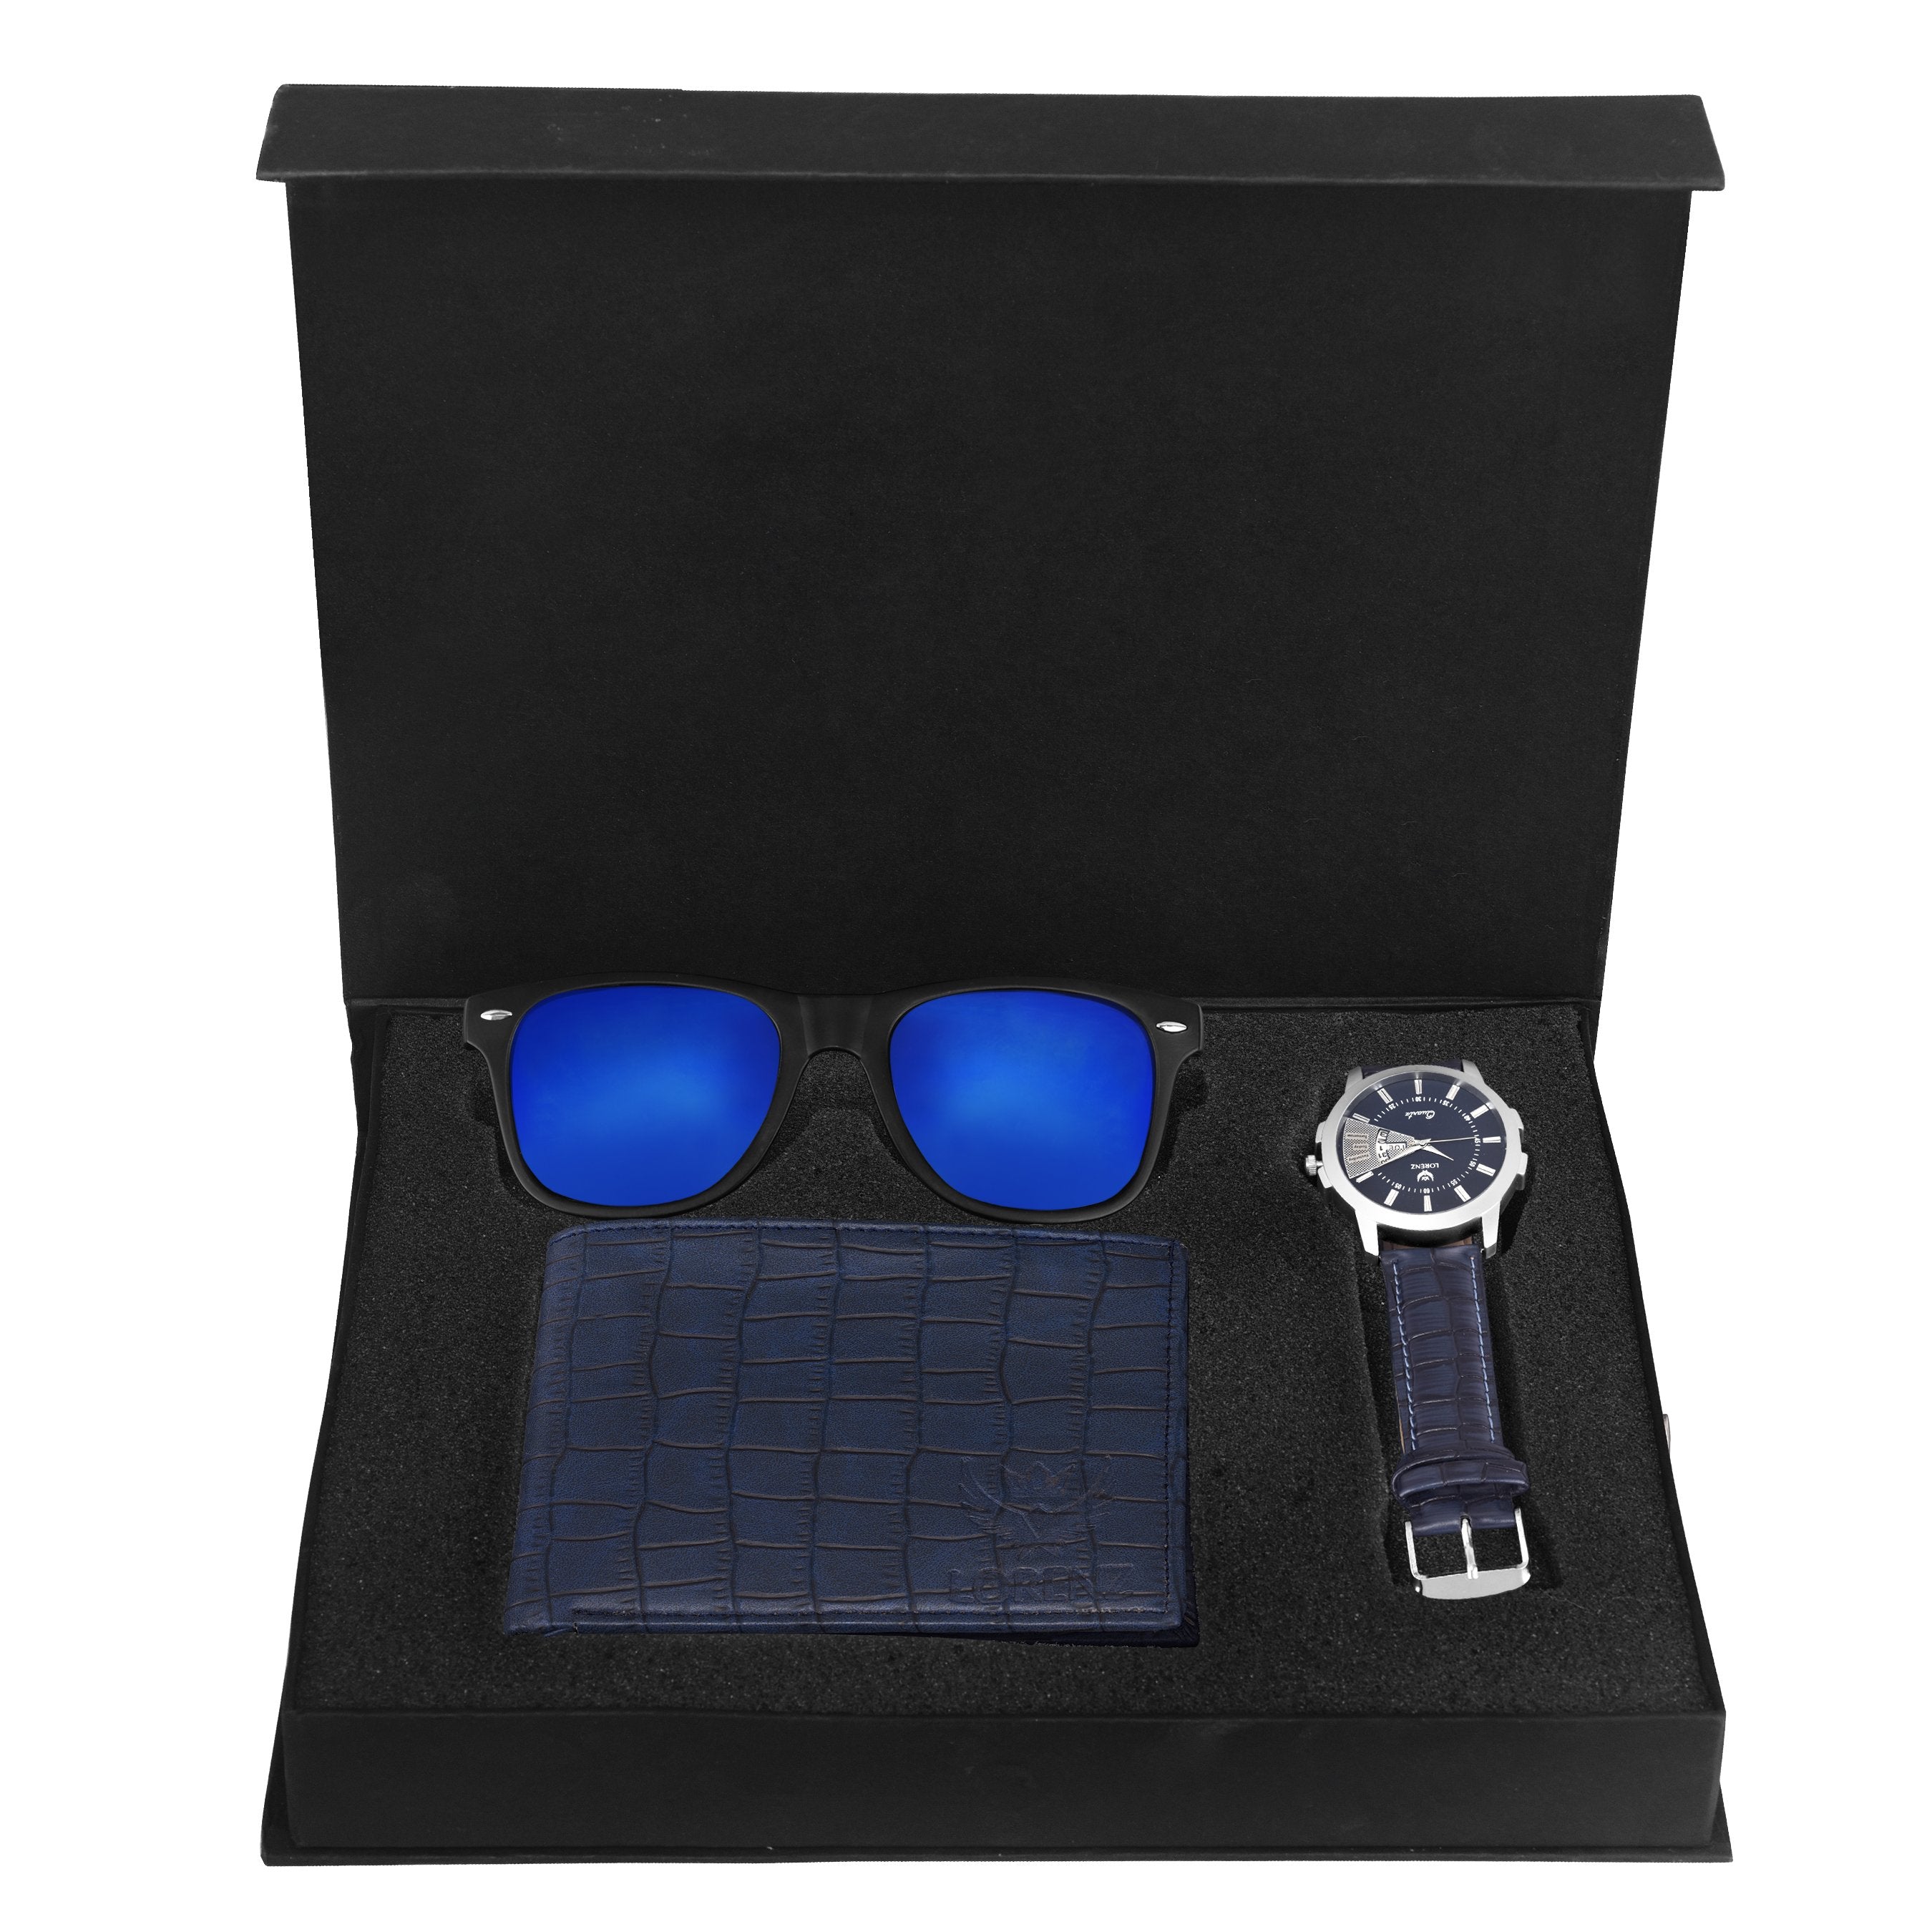 Lorenz CM-203MR-WL-06 Combo of Men's Blue Leather Strap Analogue Watch, Mercury Sunglasses and Blue Wallet - Lorenz Fashion